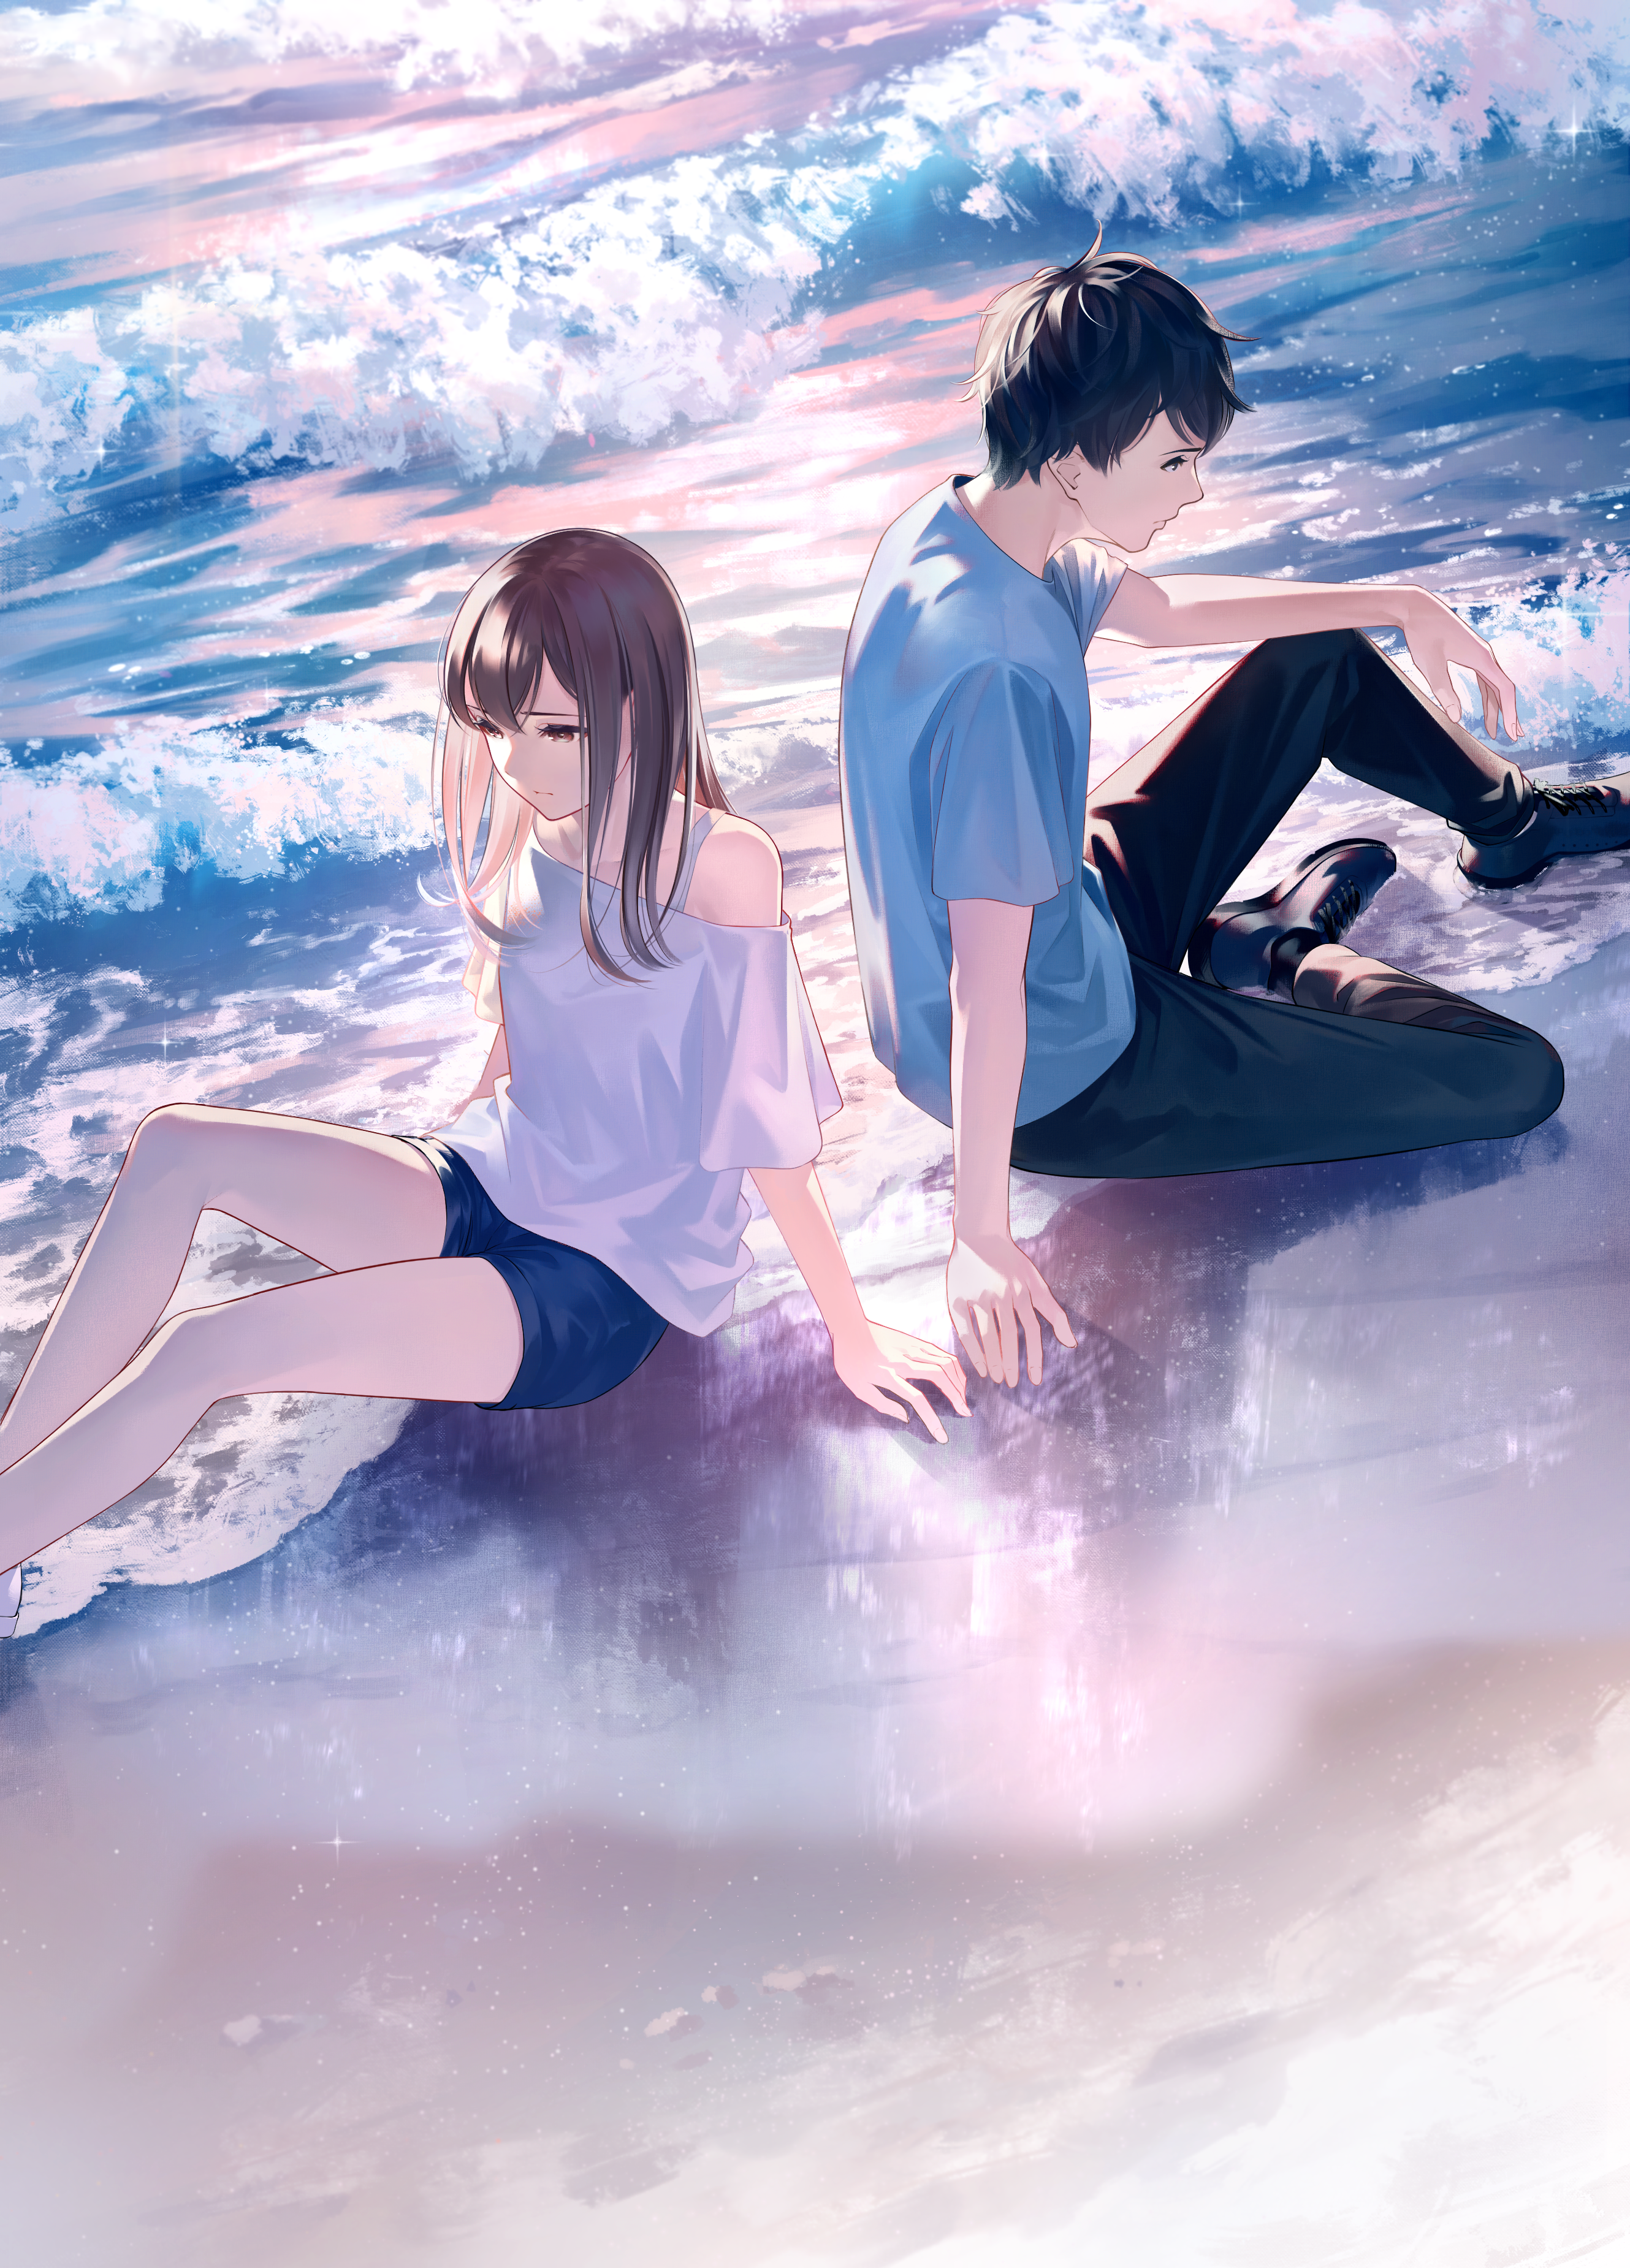 Sawasawa Vertical Anime Girls Beach Anime Boys Couple Water Water Drops Sitting Looking Away Waves B 2659x3700